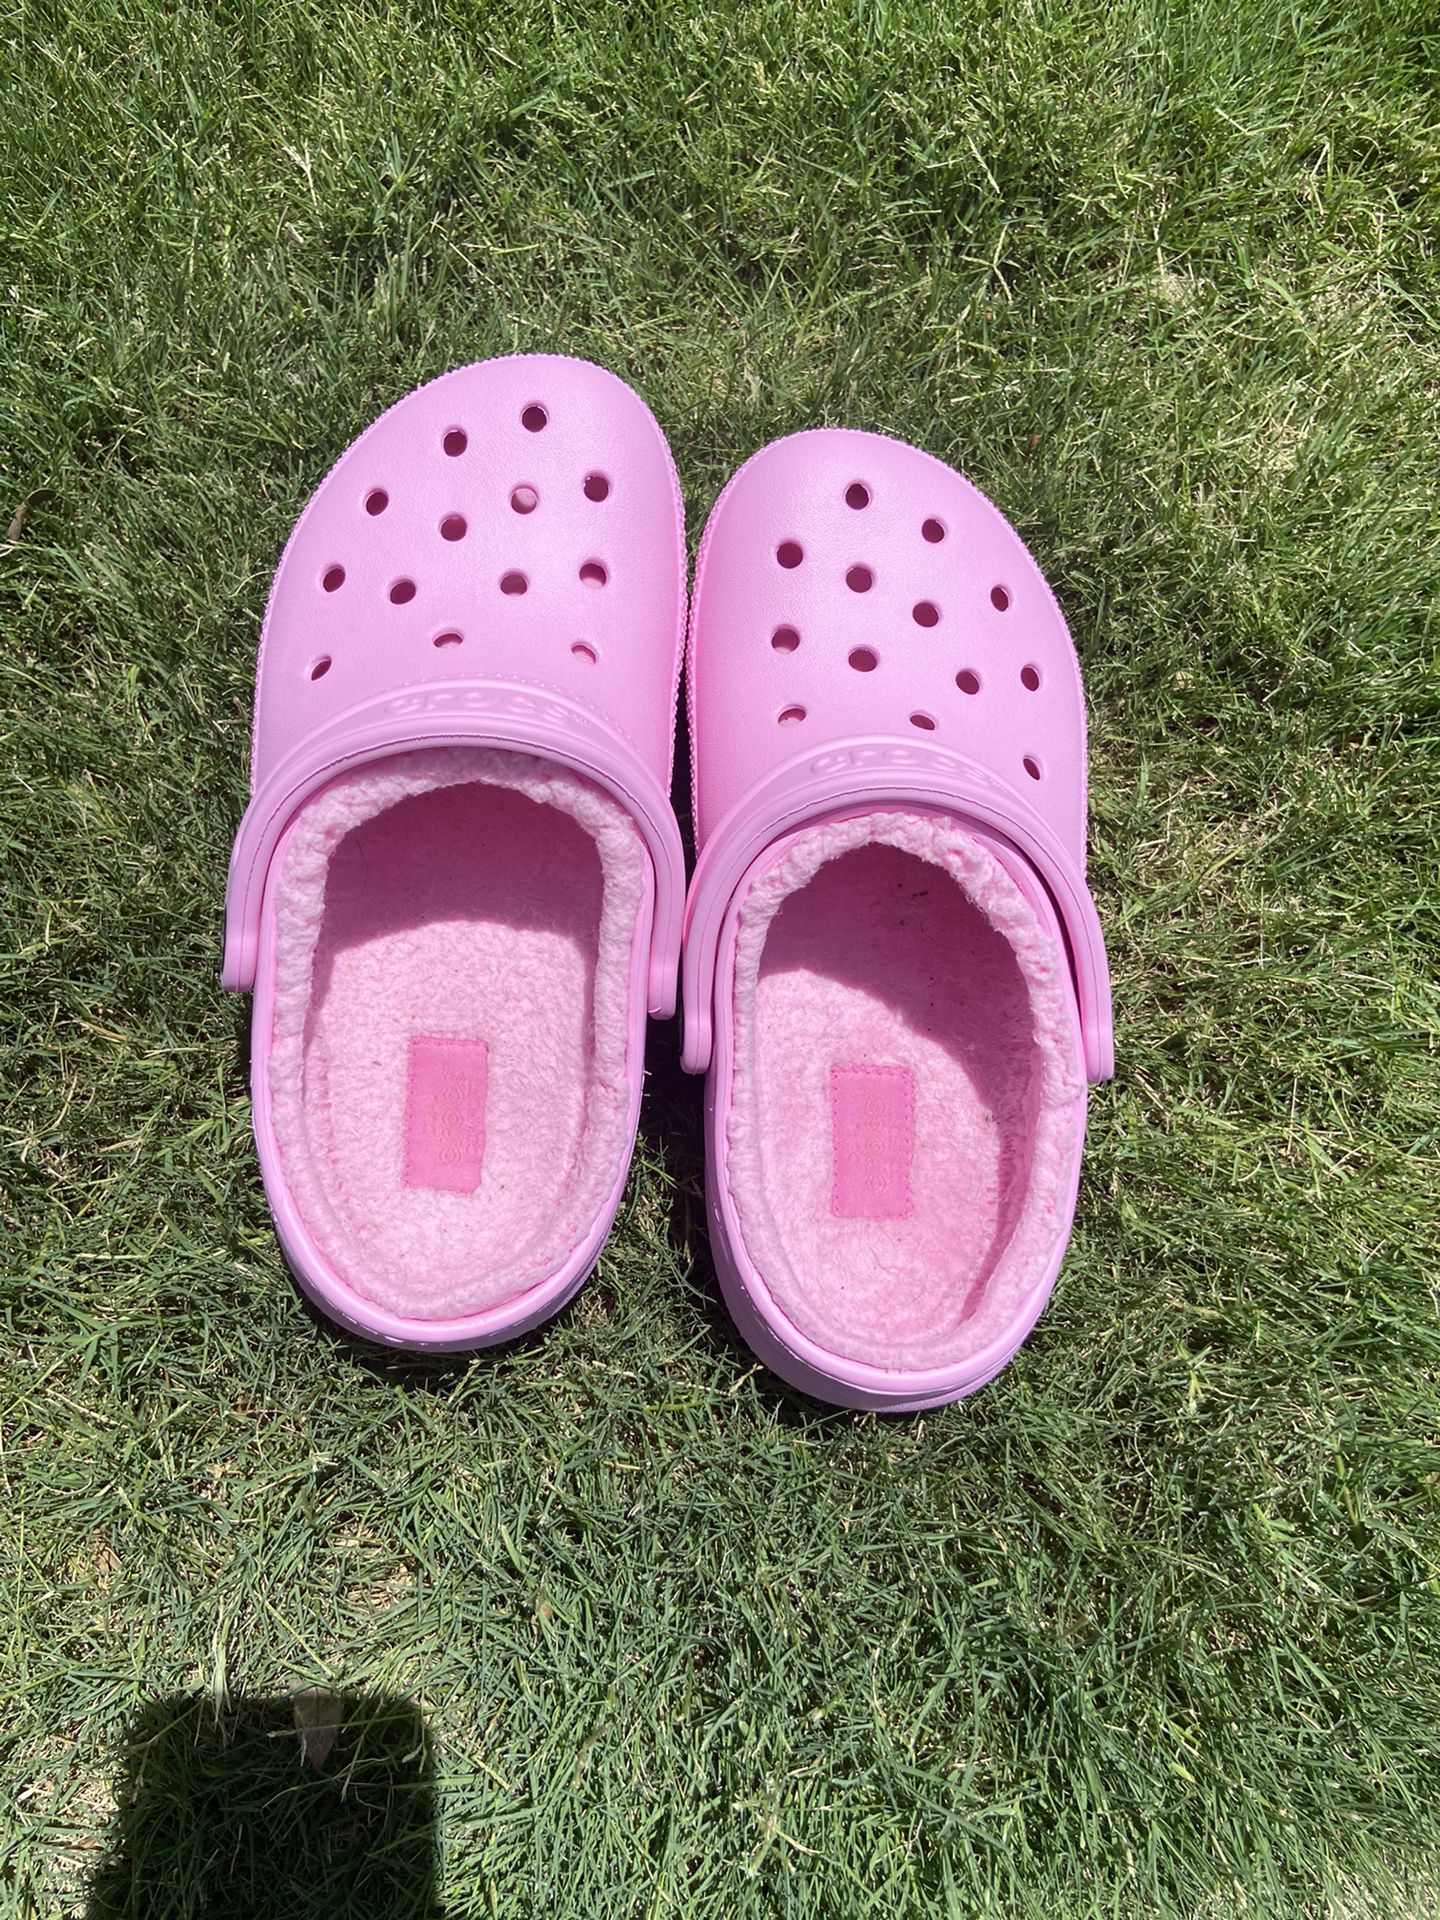 Hot Pink Fuzzy Crocs